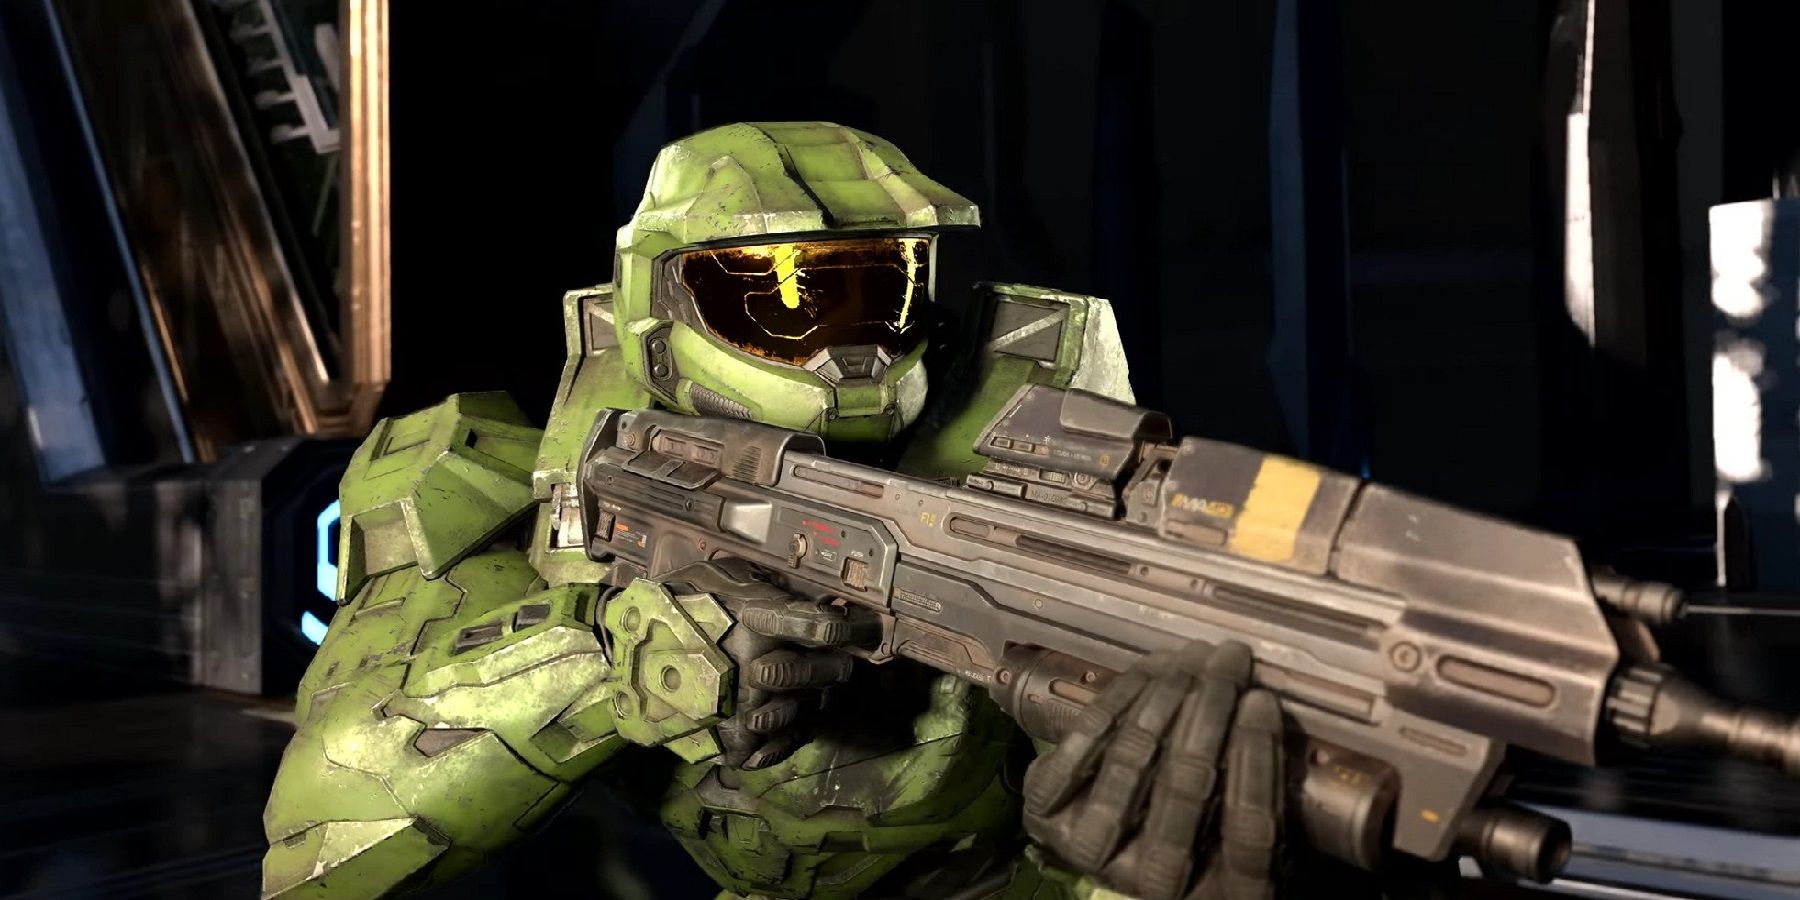 A Halo Infinite Co-op kampányát 343 Industries jelentette be